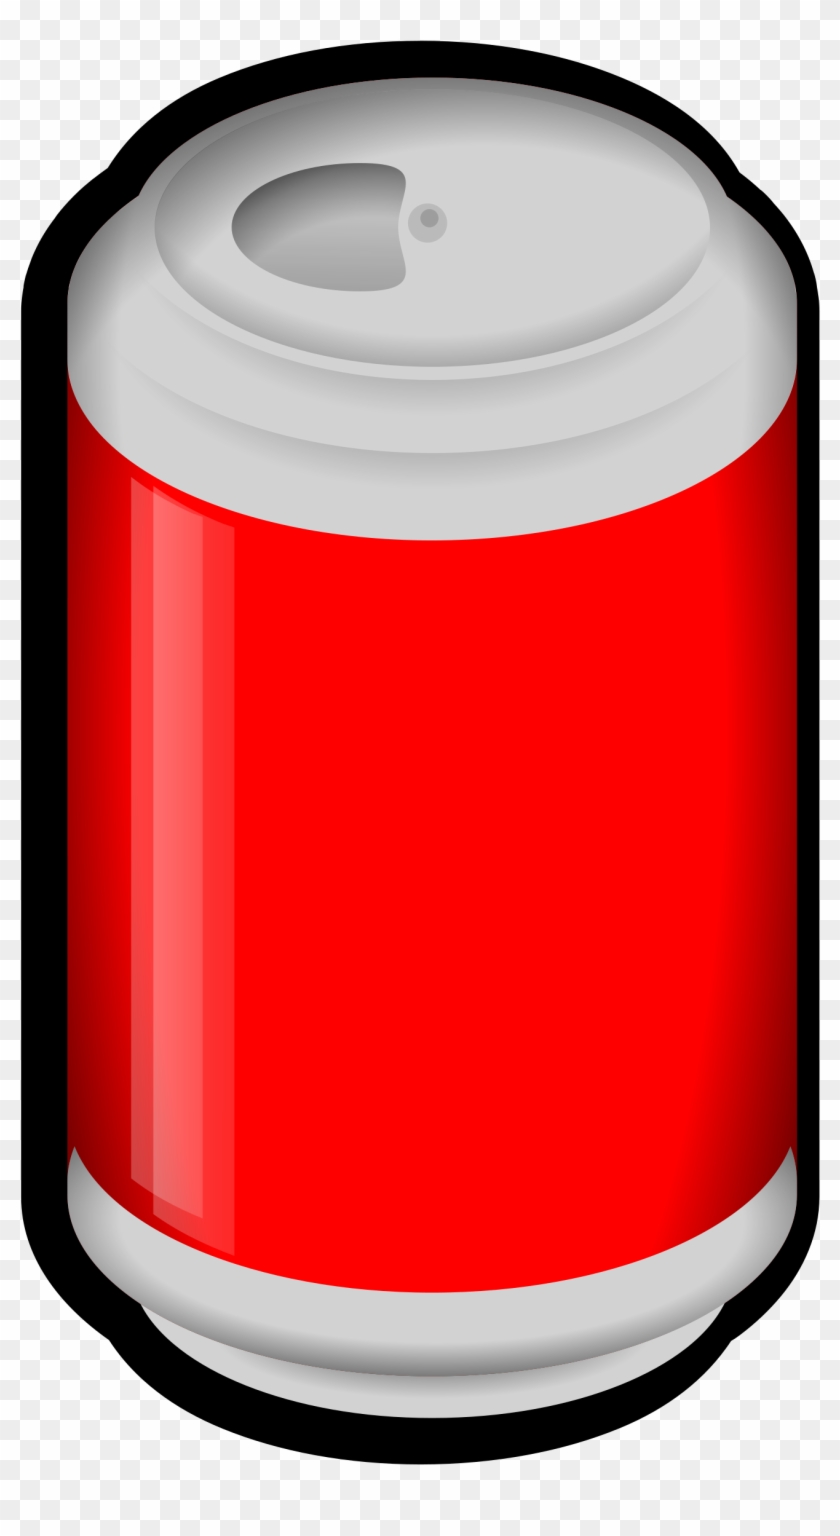 Movie Soda Cup Clipart Image - Clip Art Aluminum Cans #64419